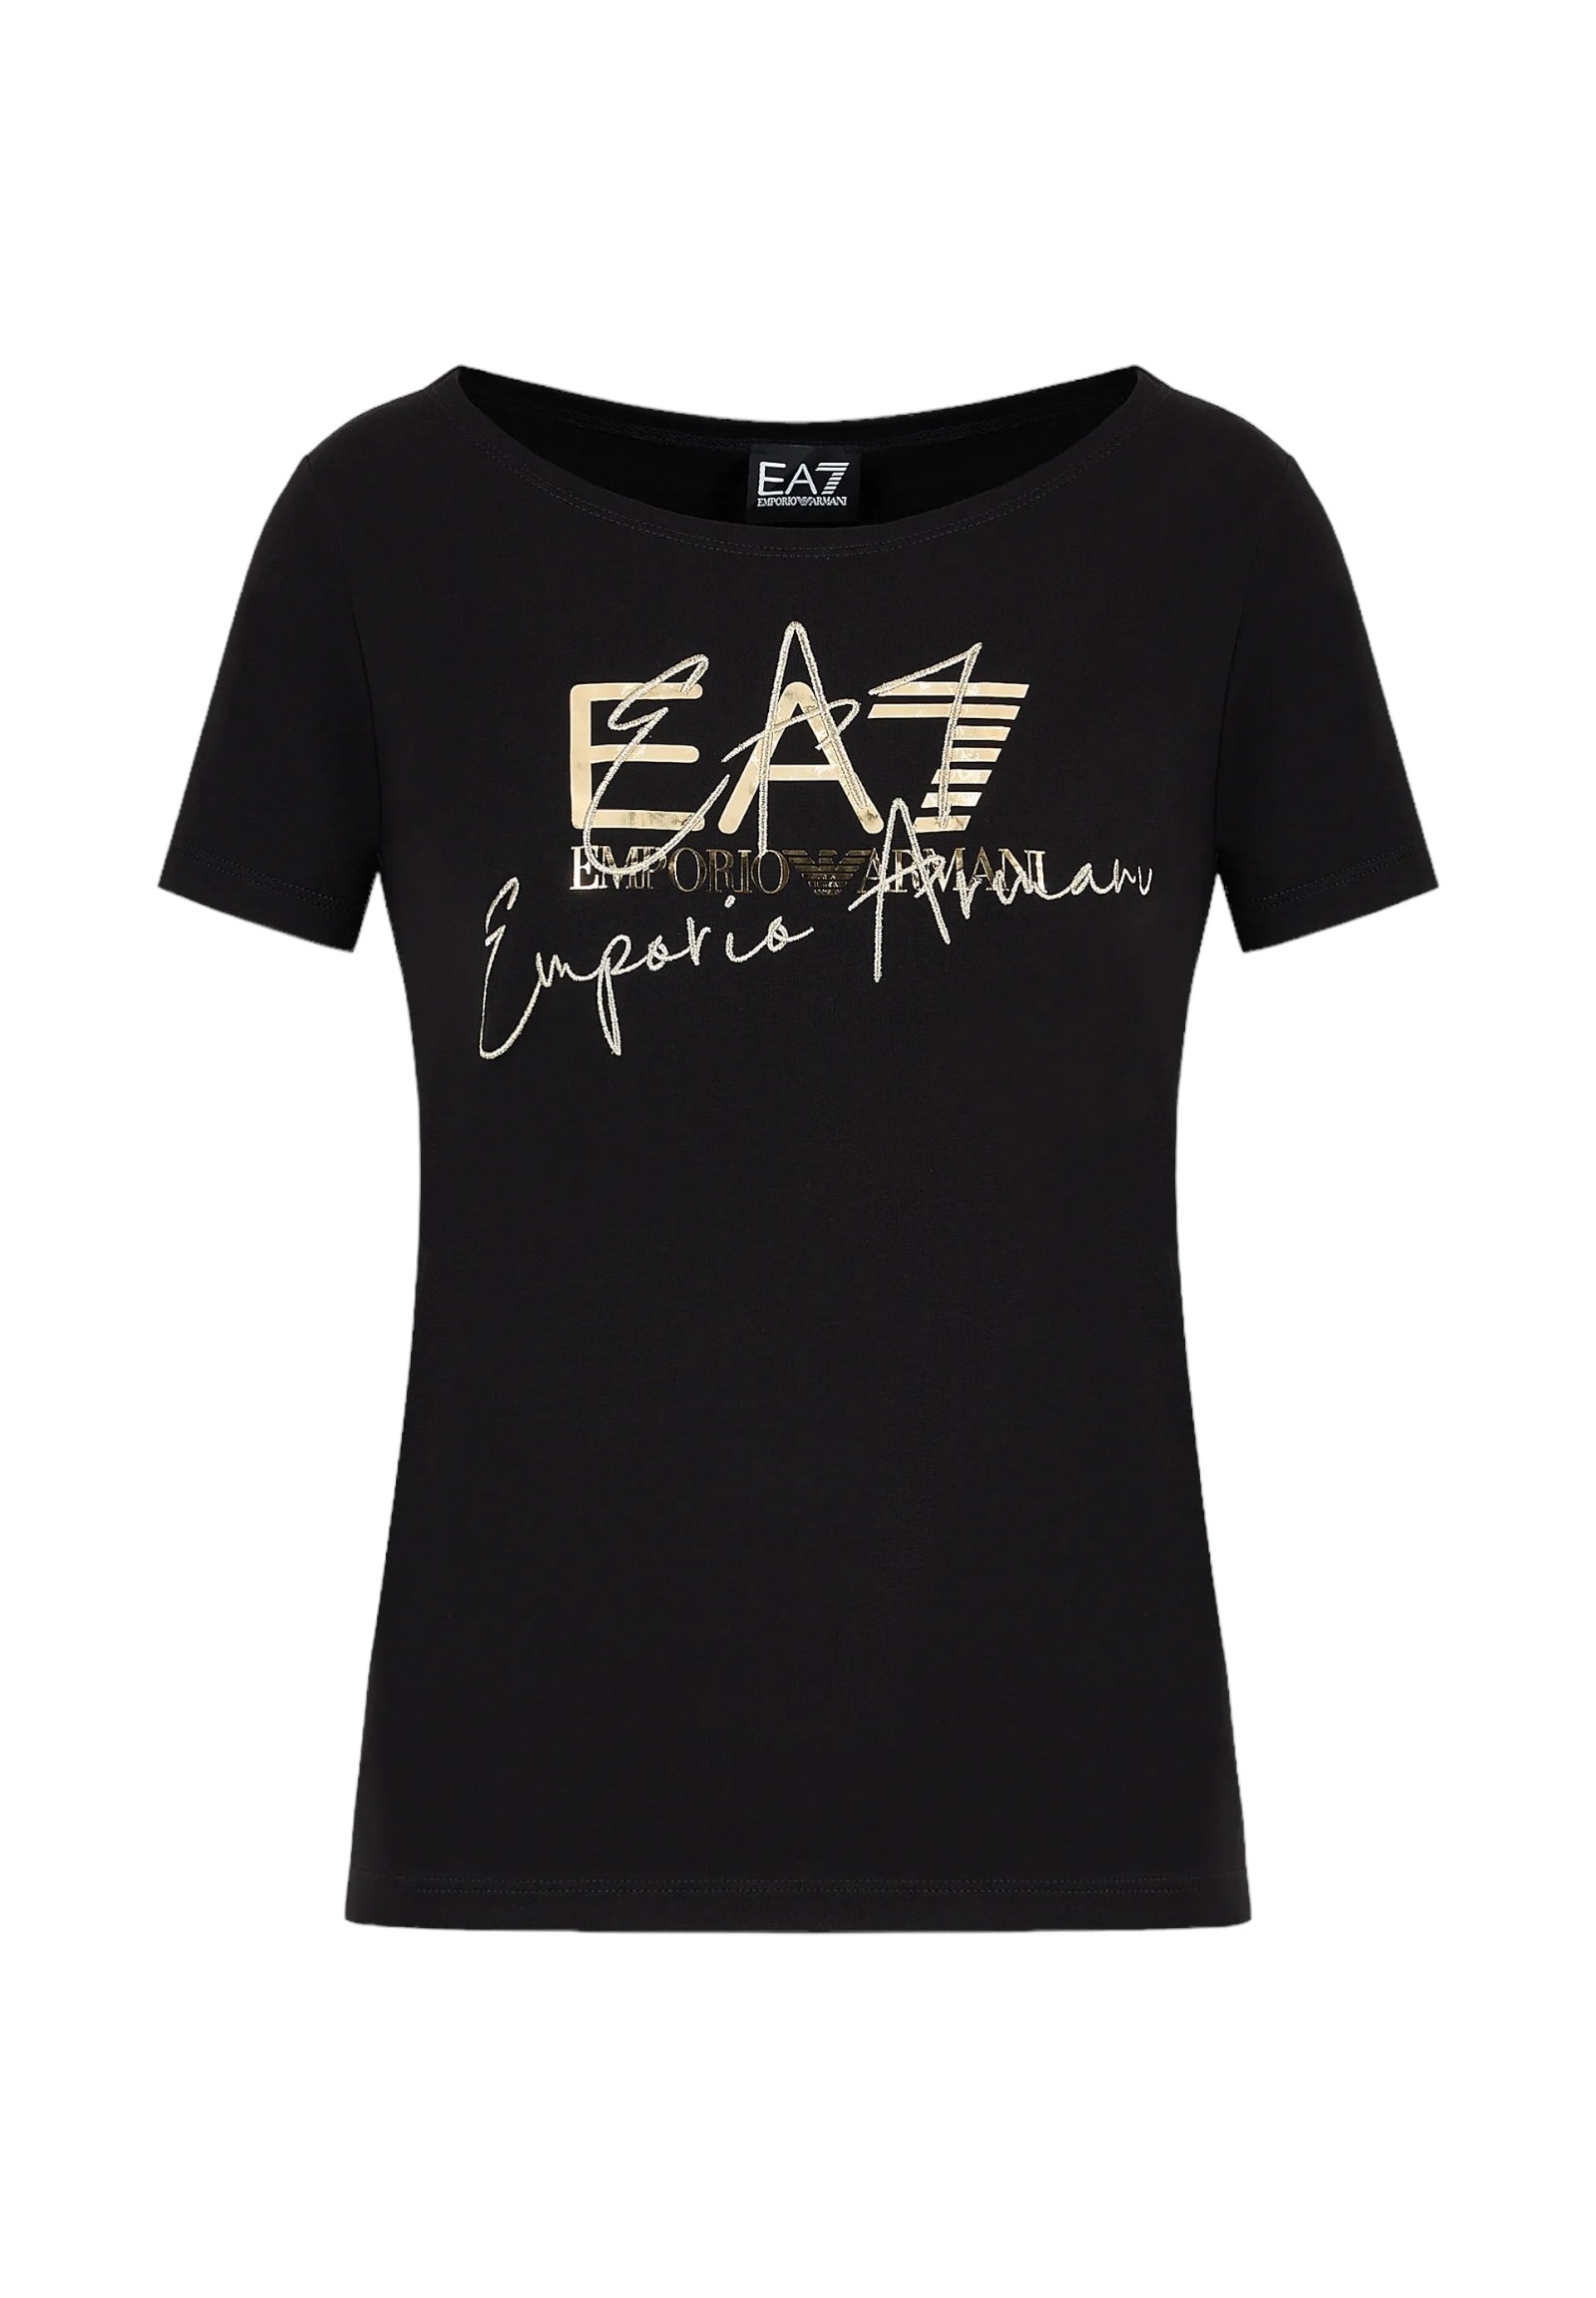 Ea7 Emporio Armani T-Shirt 3dtt26 Black